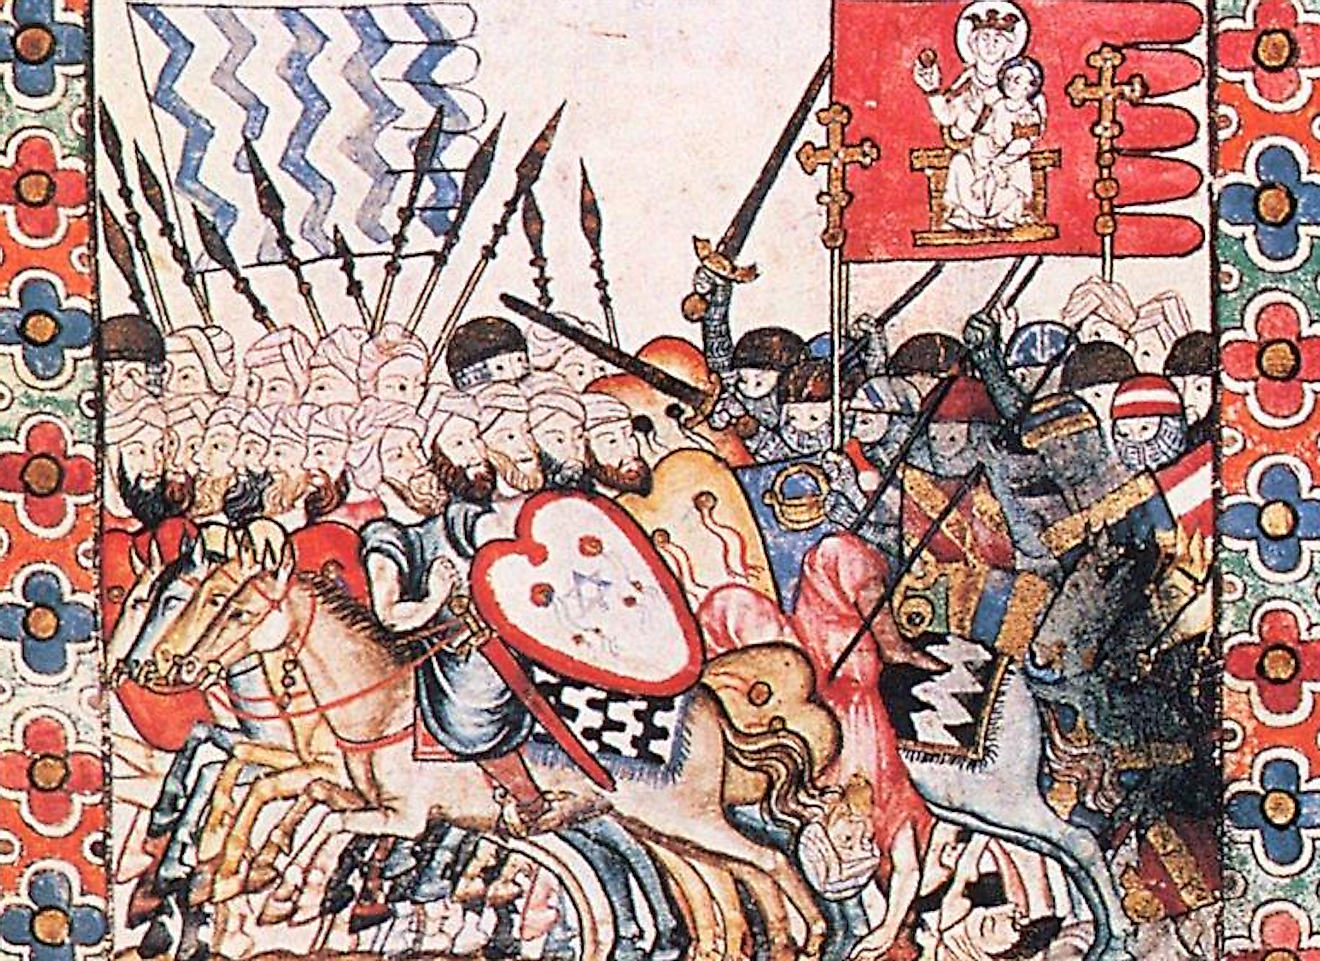 Moors and Christian Battle of Marrakesh taken from Cantigas de Santa Maria.